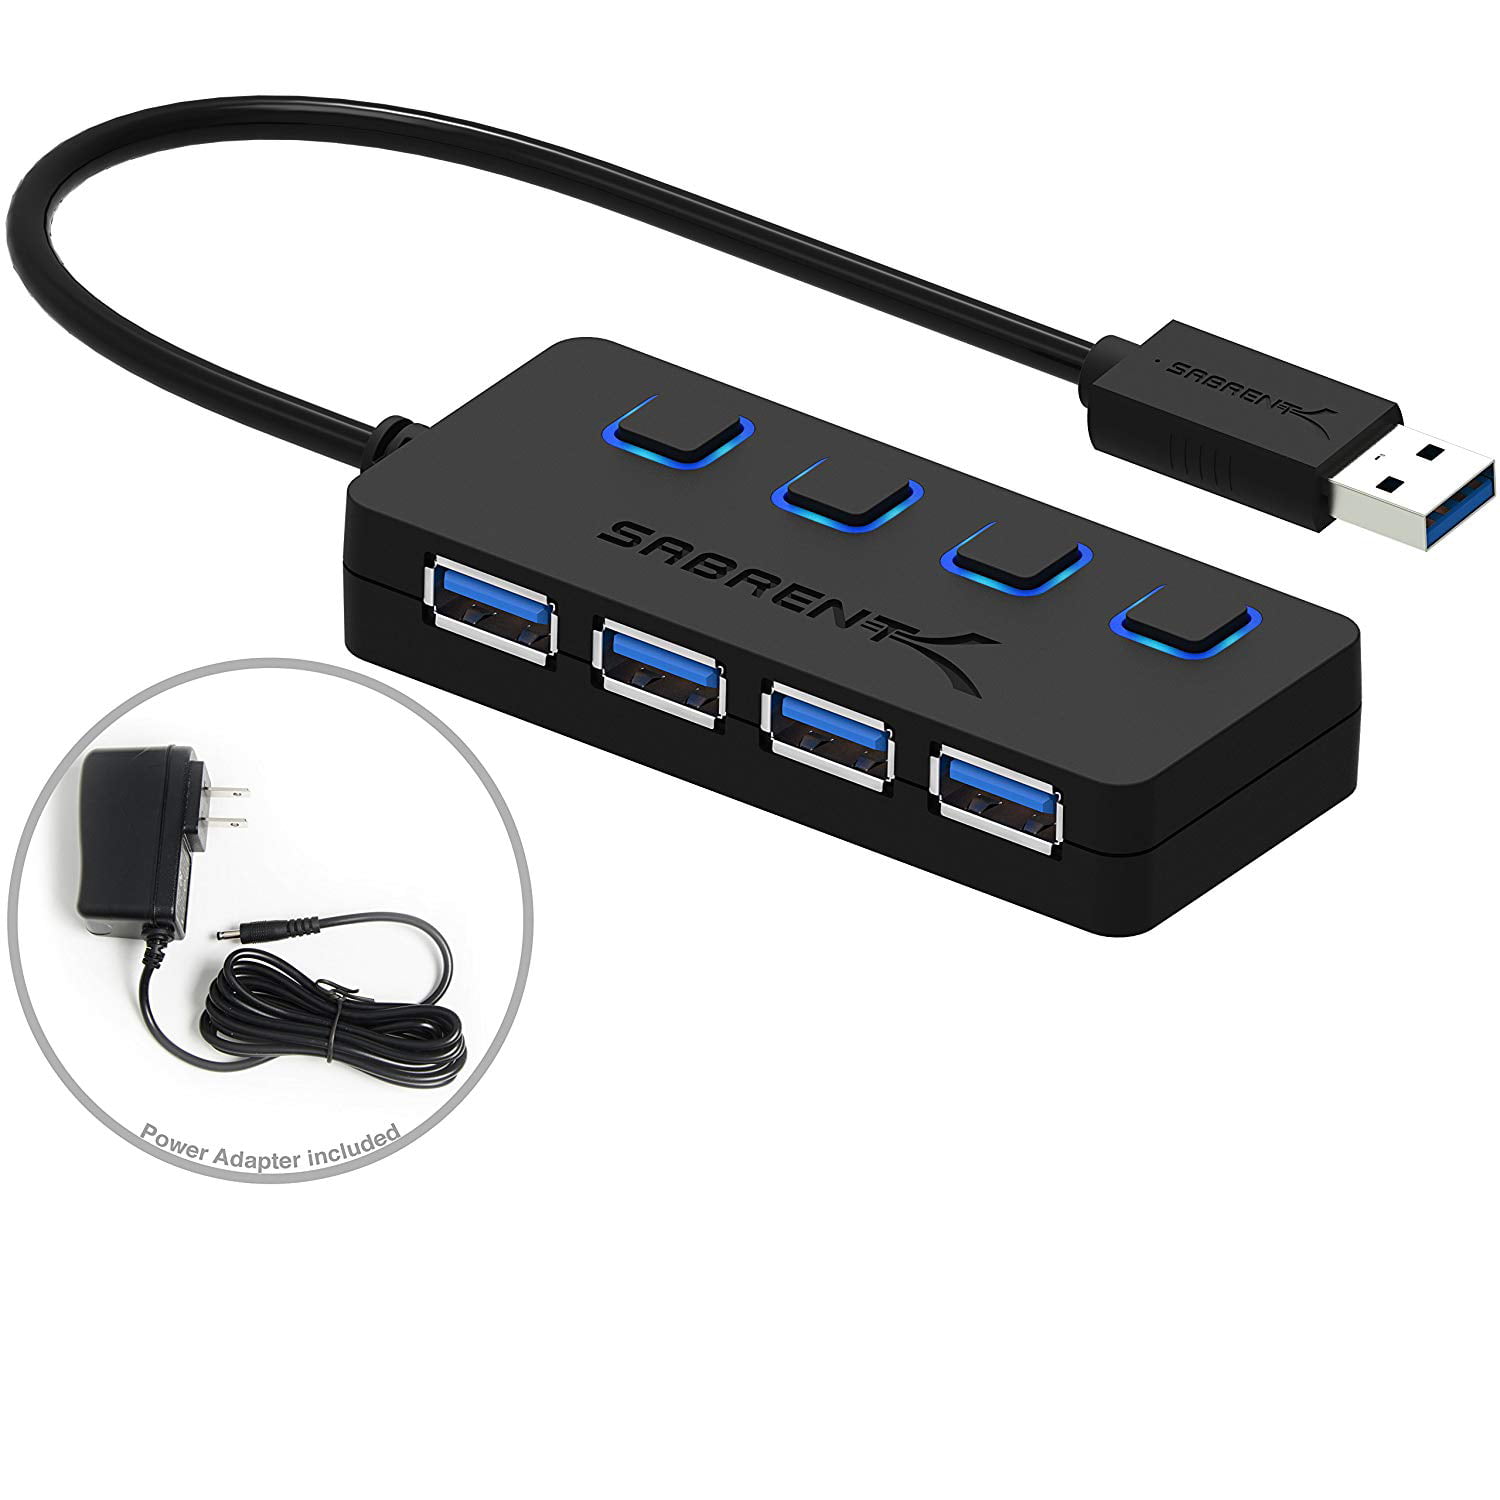 Basics 4 Port USB 3.0 Hub with 5V//2.5A power adapter